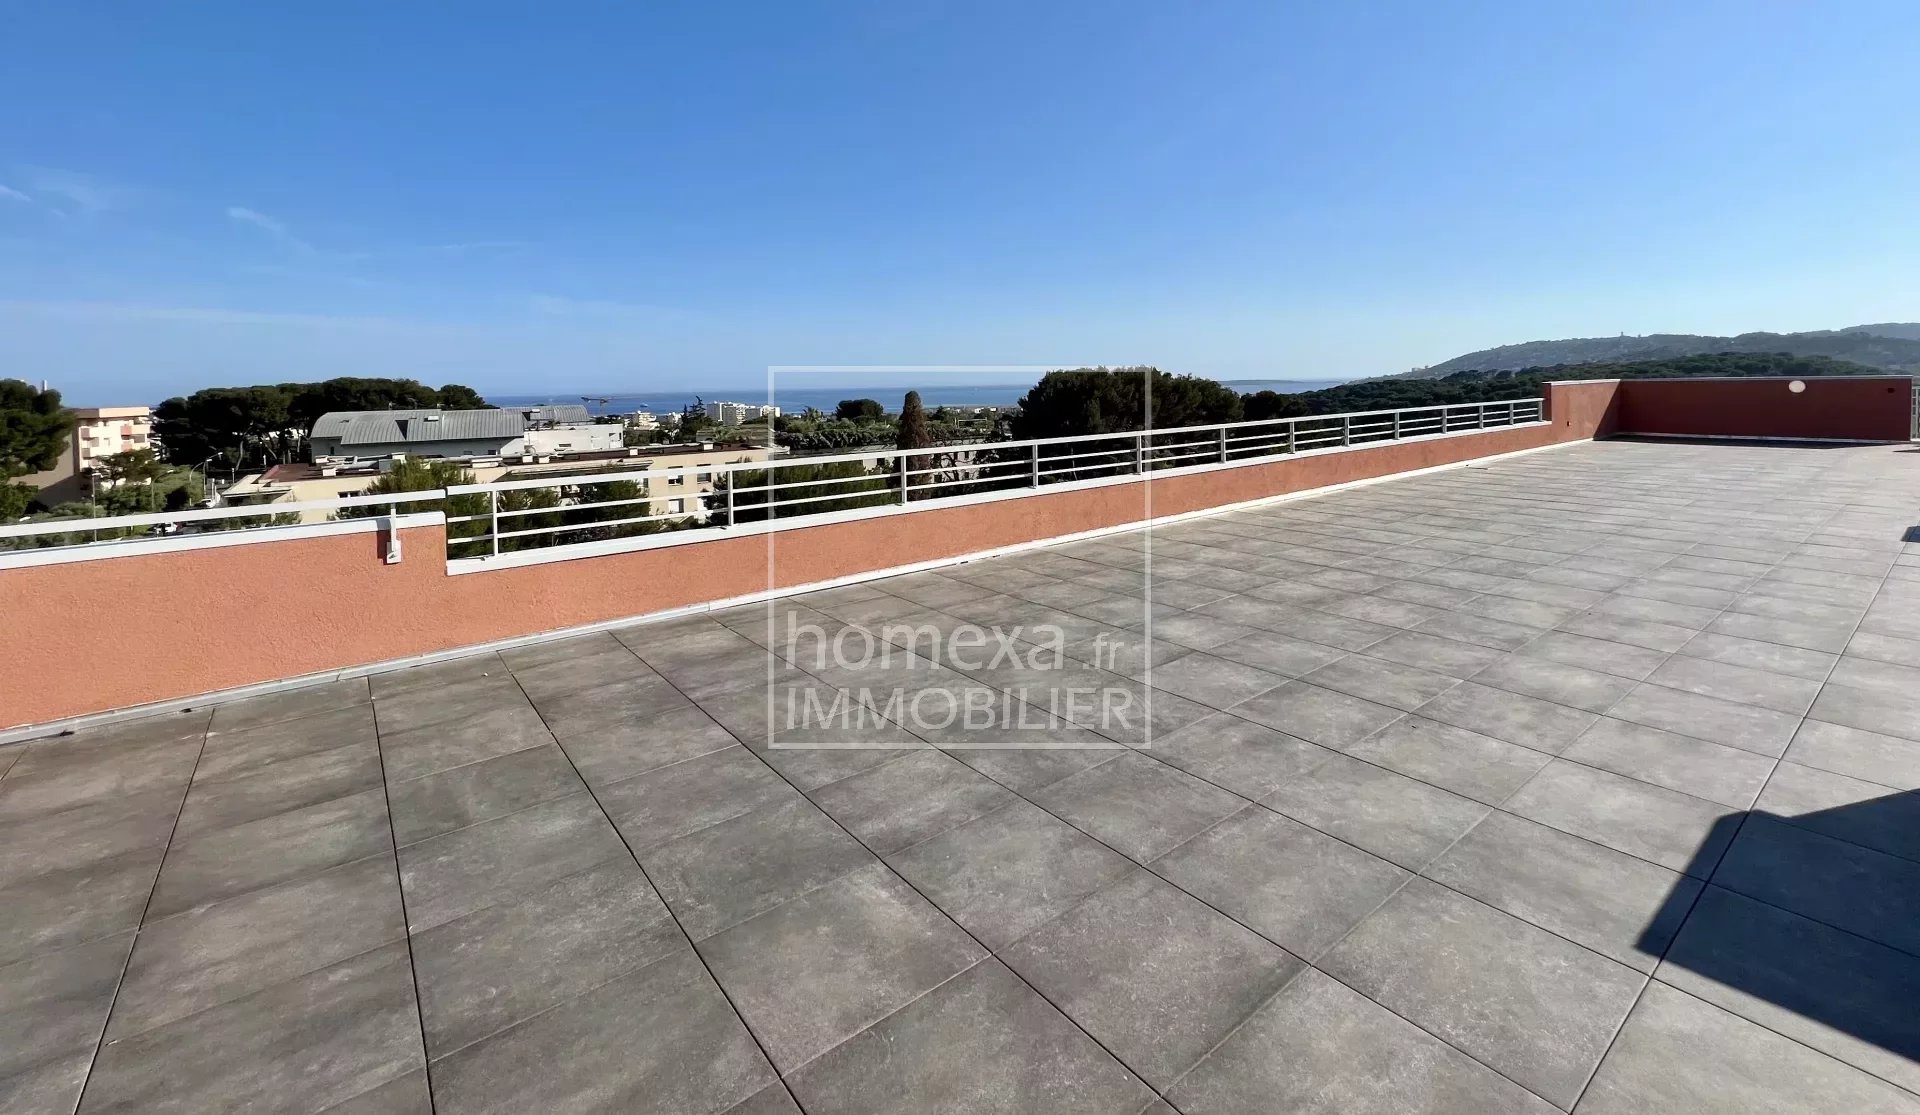 Vente appartement toit-terrasse piscinable Antibes